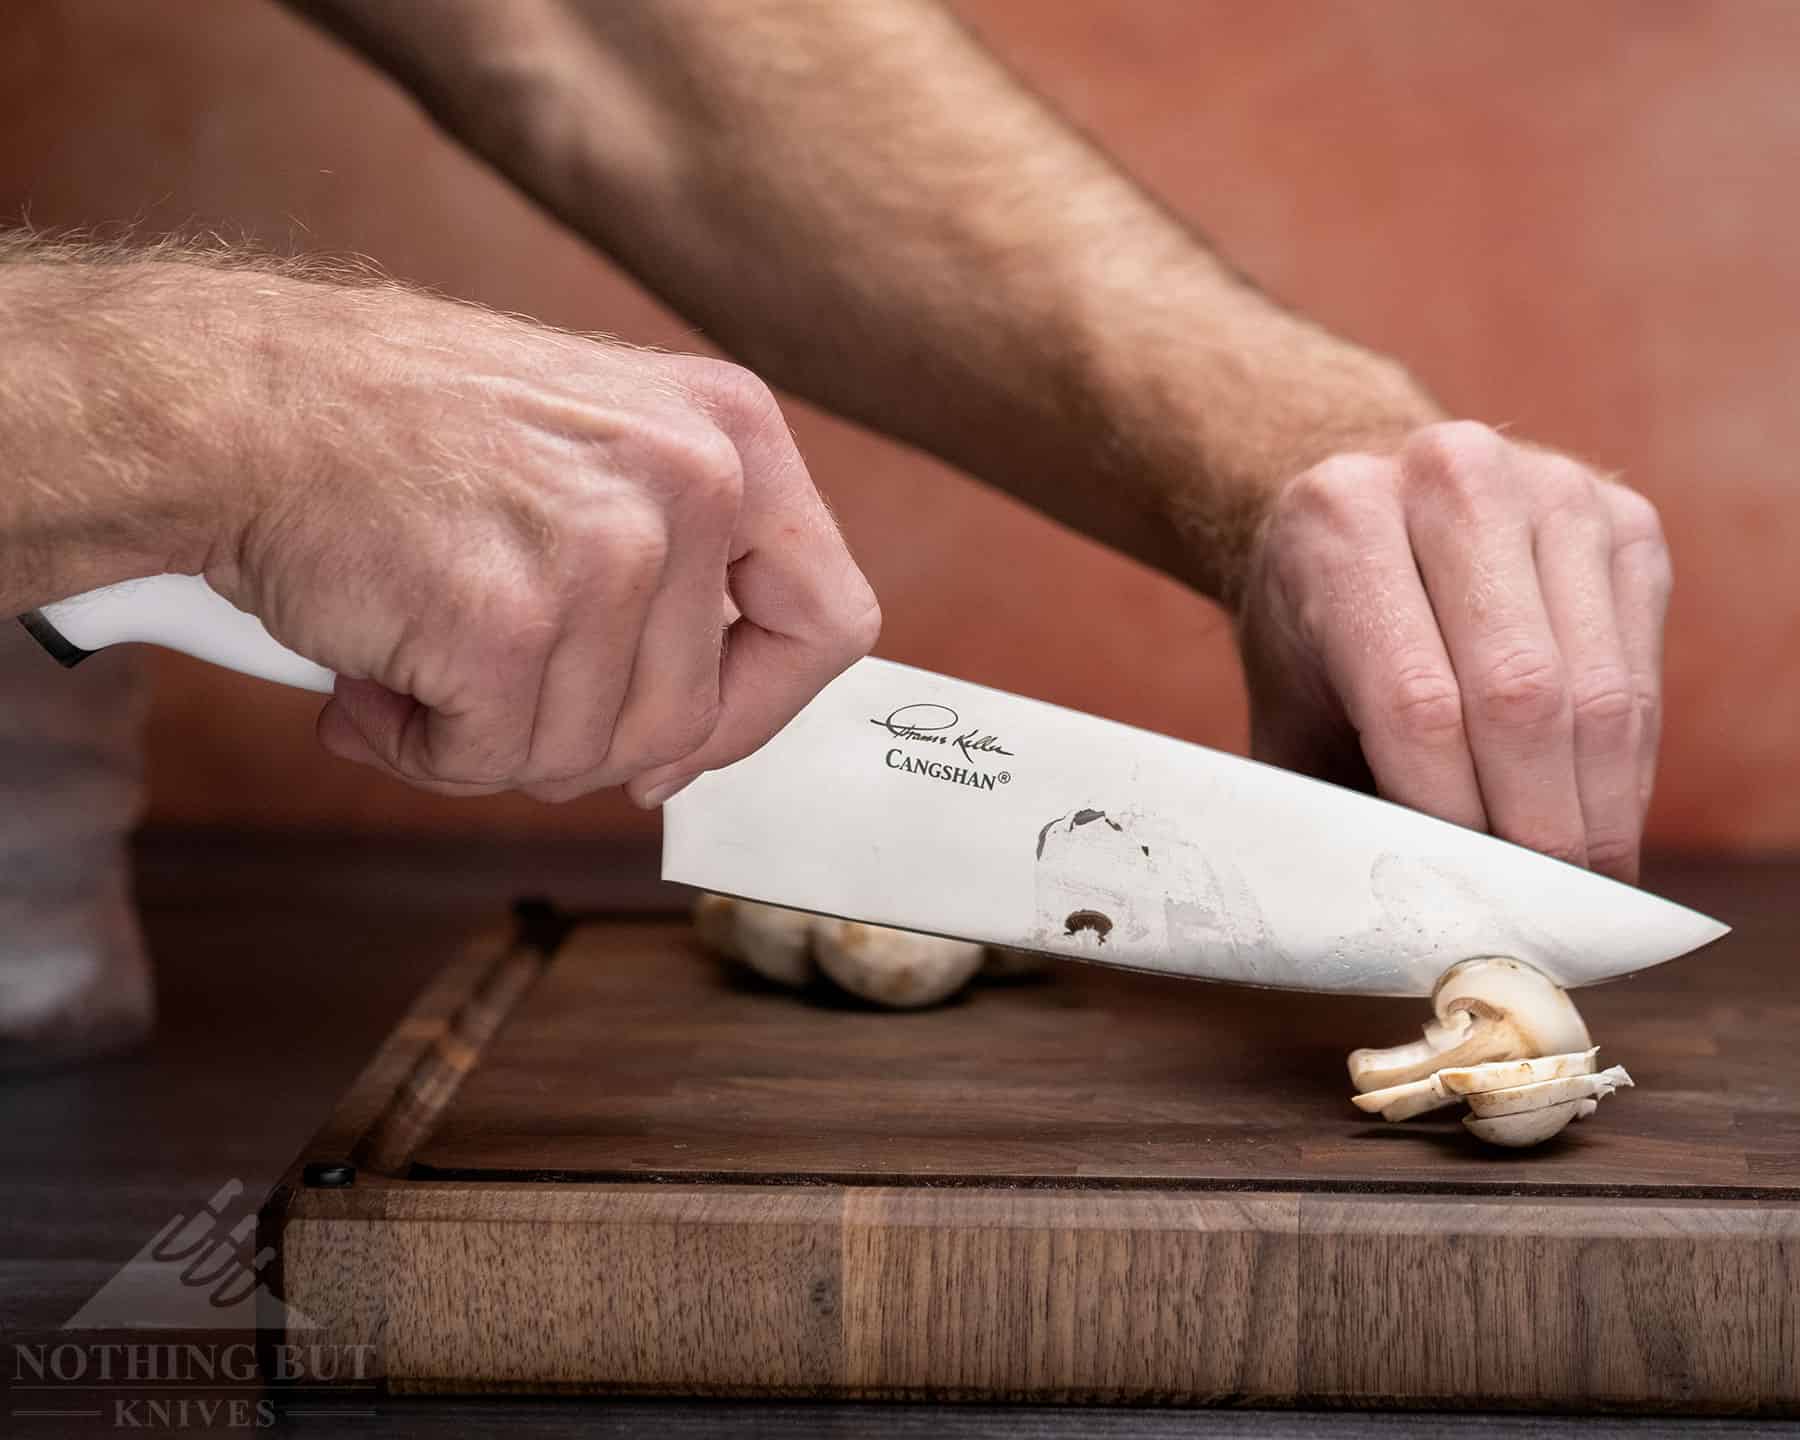 https://www.nothingbutknives.com/wp-content/uploads/2022/11/Slicing-Mushroom-With-the-Cangshan-Thomas-Keller-Chef-Knife.jpg